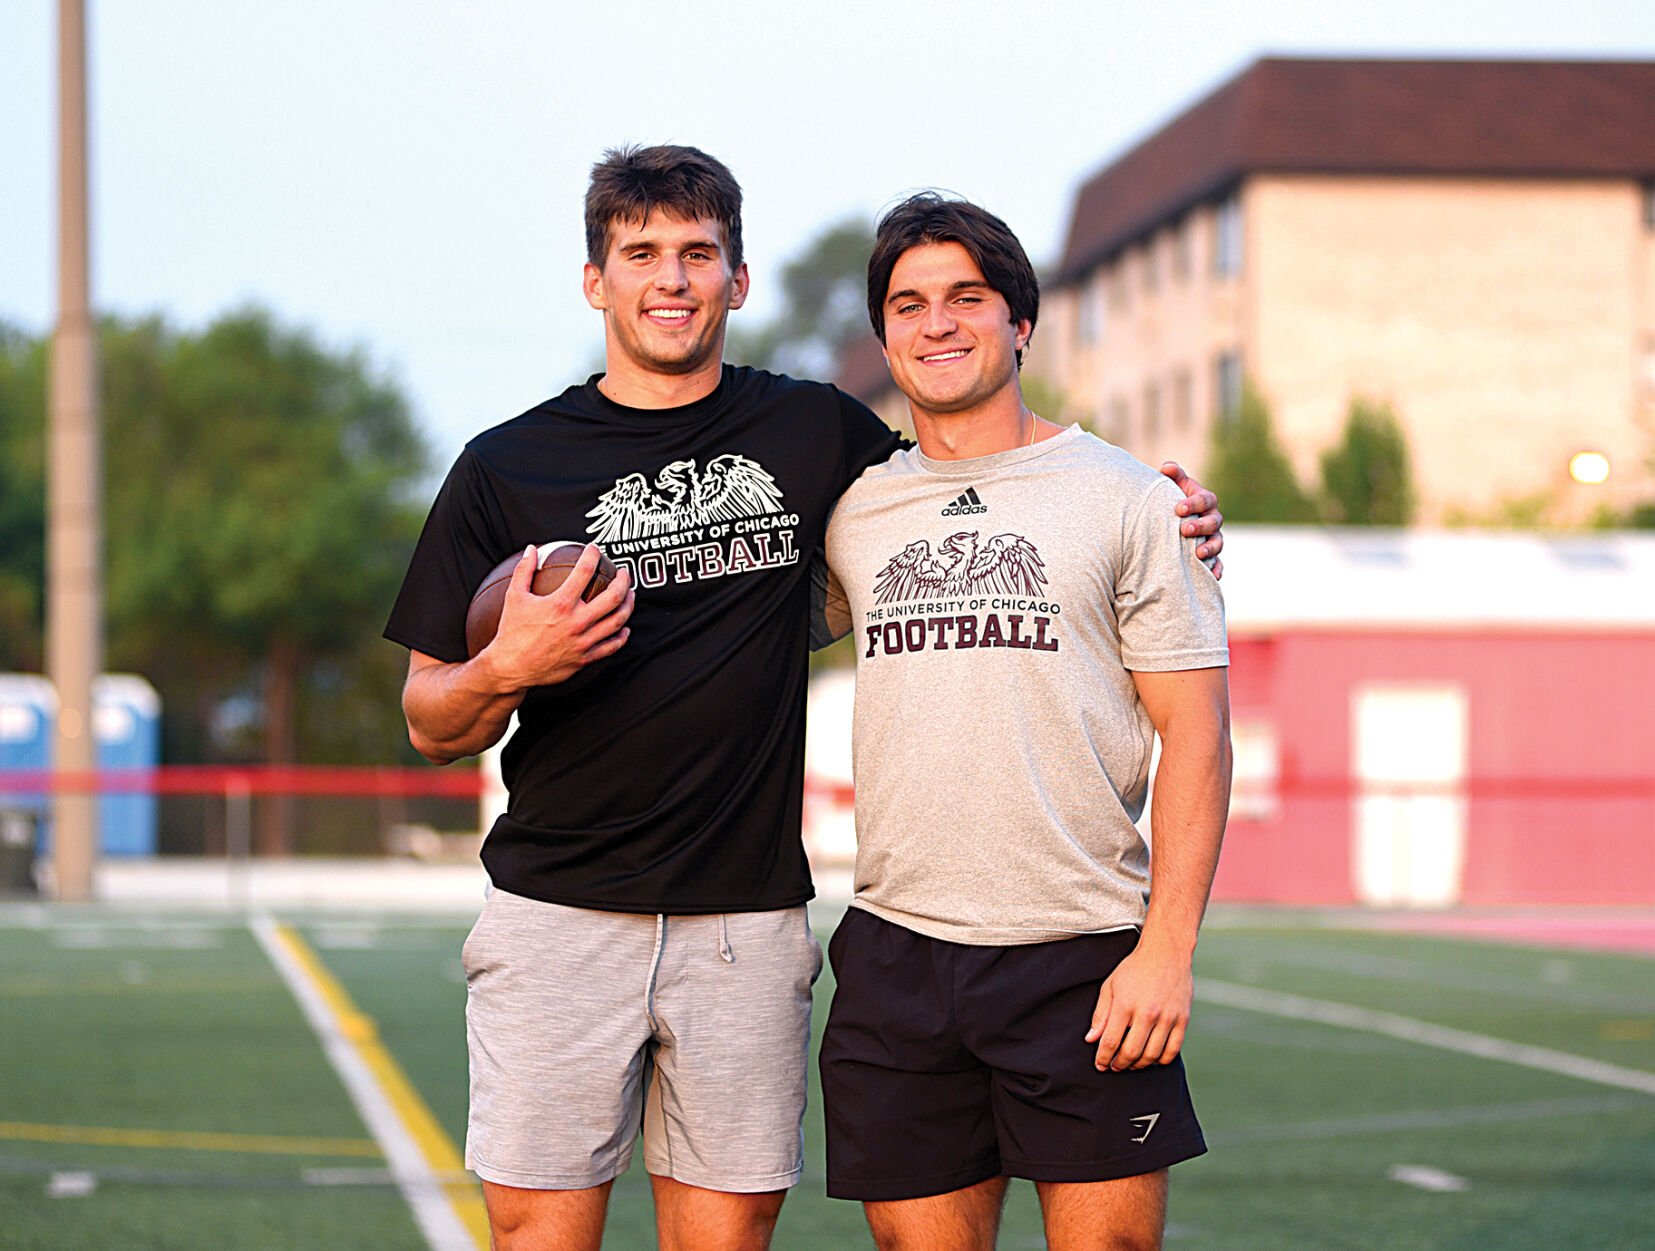 Markett brothers reunite at University of Chicago | Sports